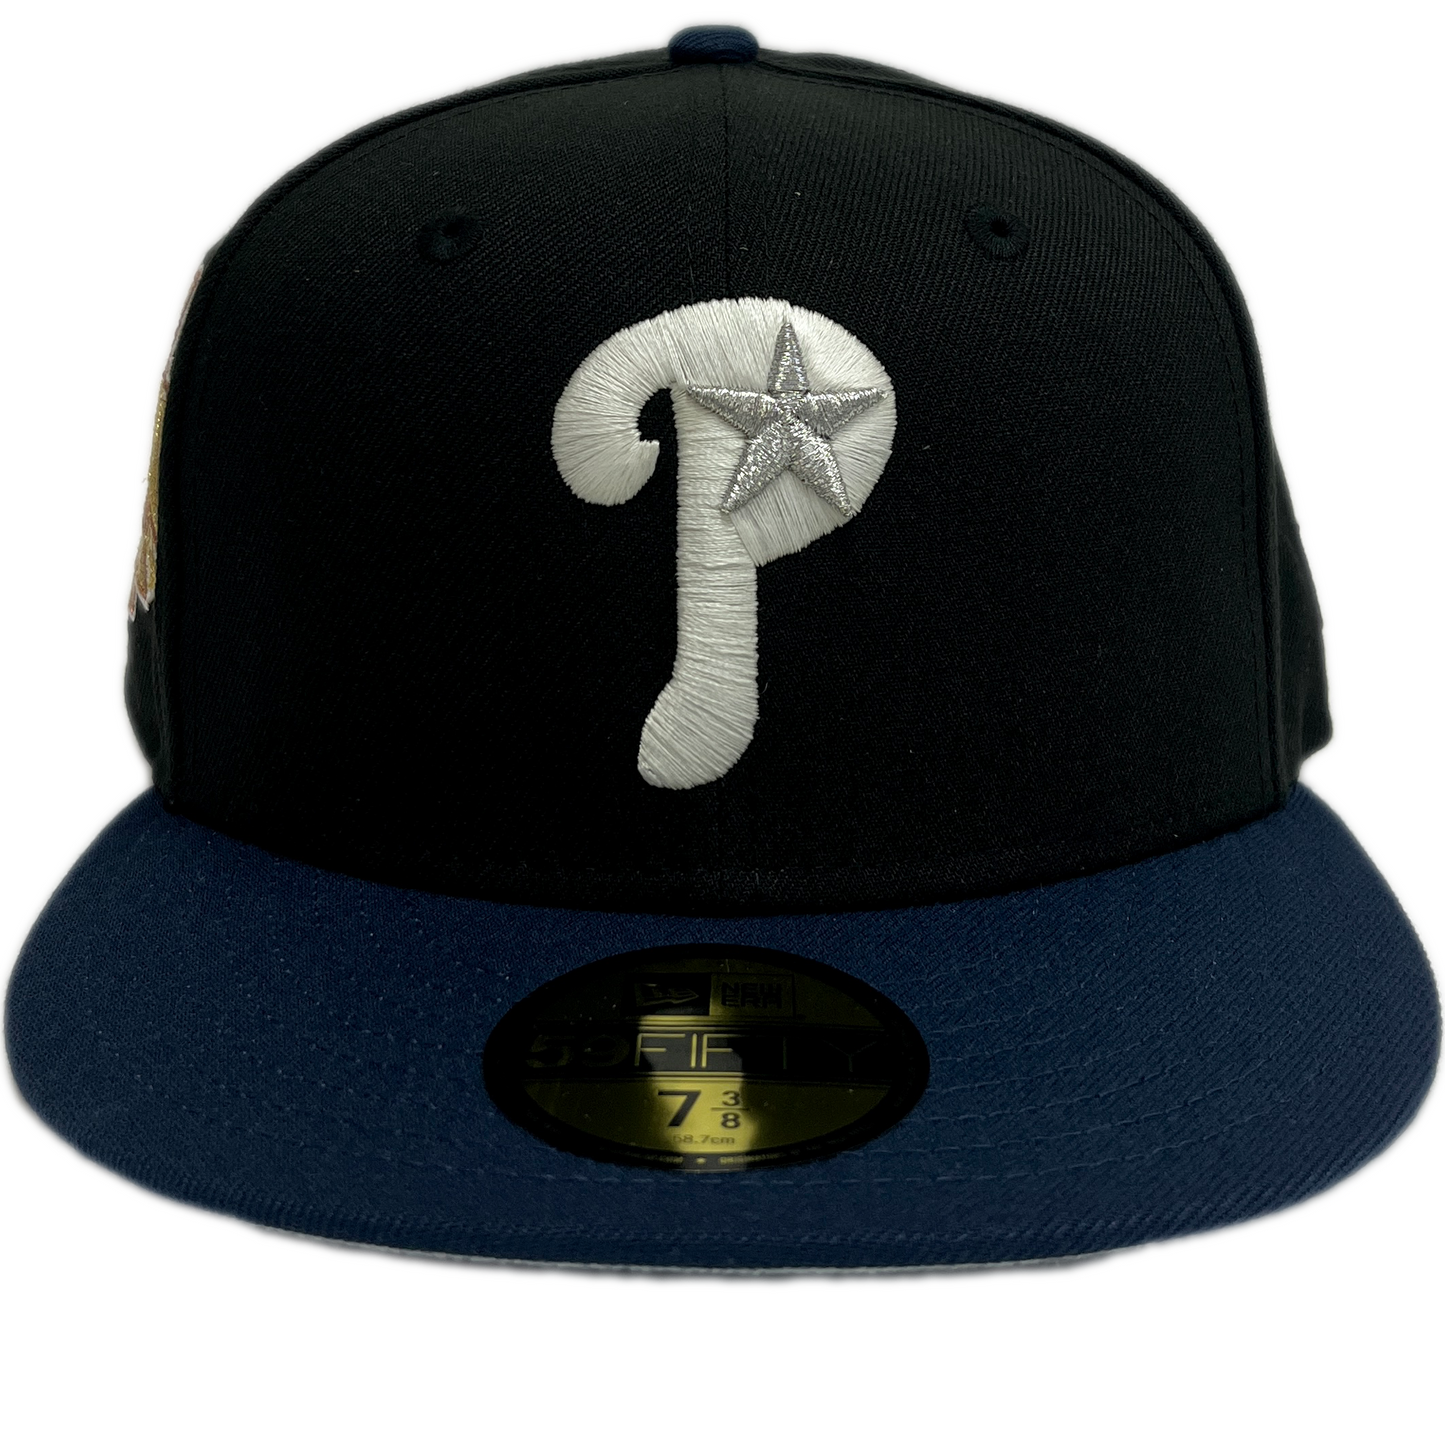 New Era Philadelphia Phillies 59FIFTY Fitted Hat - Black/ Ocean